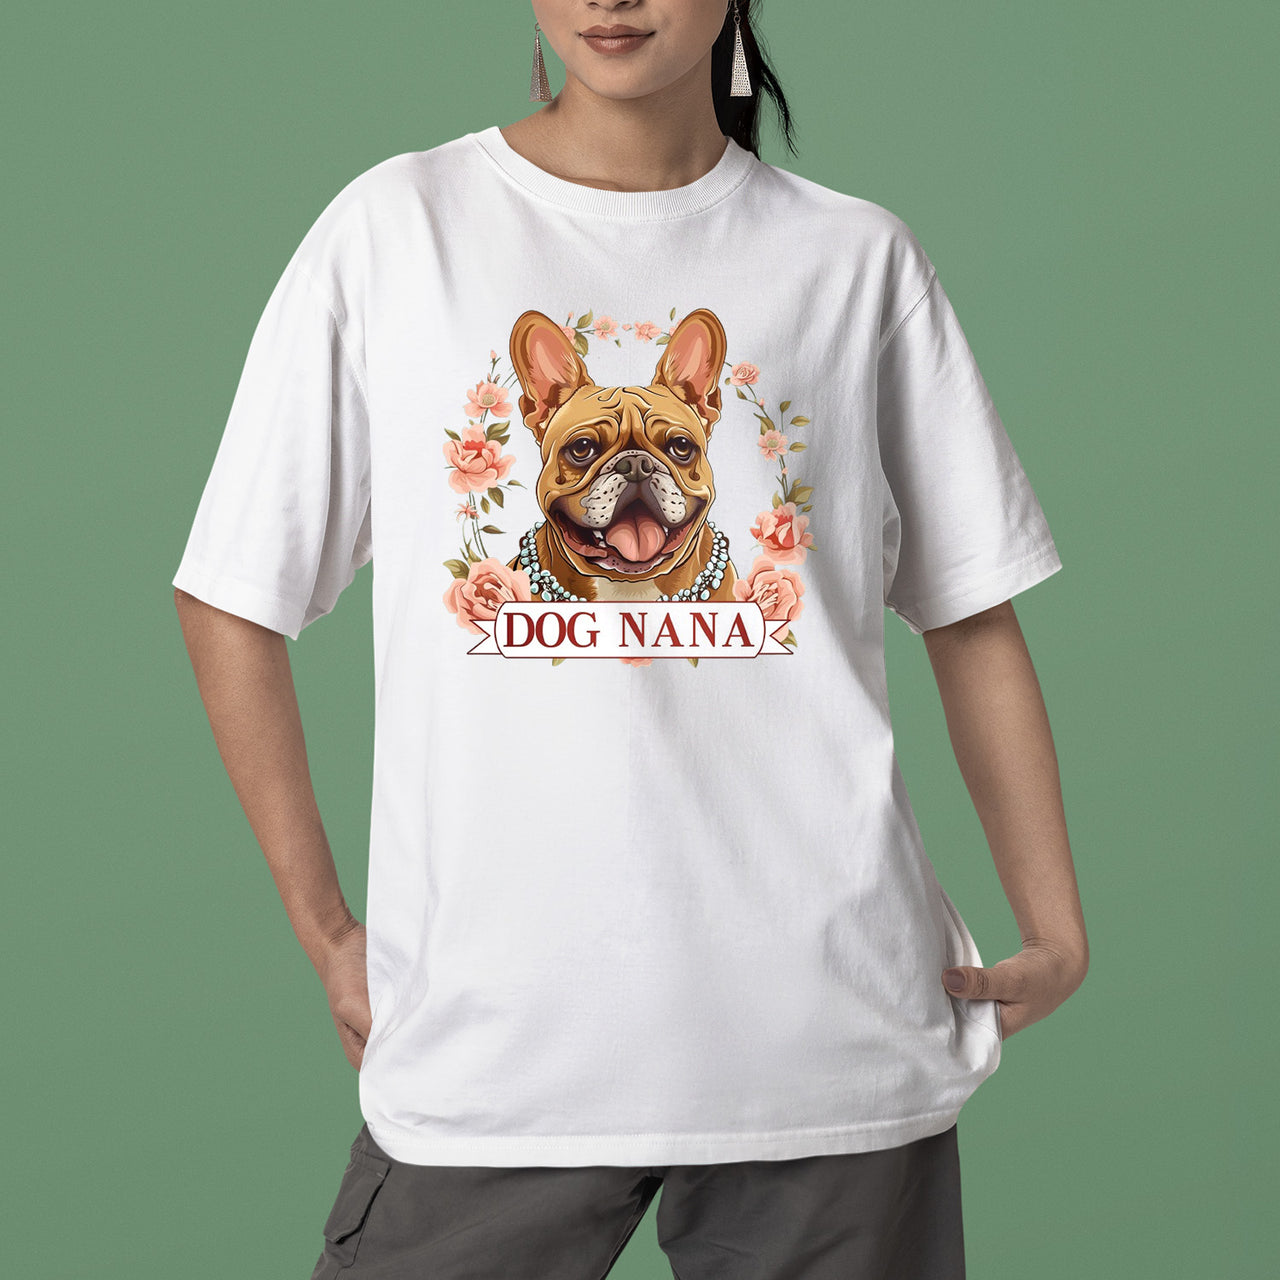 Bulldog T-shirt, Pet Lover Shirt, Dog Lover Shirt, Dog Nana  T-Shirt, Dog Owner Shirt, Gift For Dog Grandma, Funny Dog Shirts, Women Dog T-Shirt, Mother's Day Gift, Dog Lover Wife Gifts, Dog Shirt